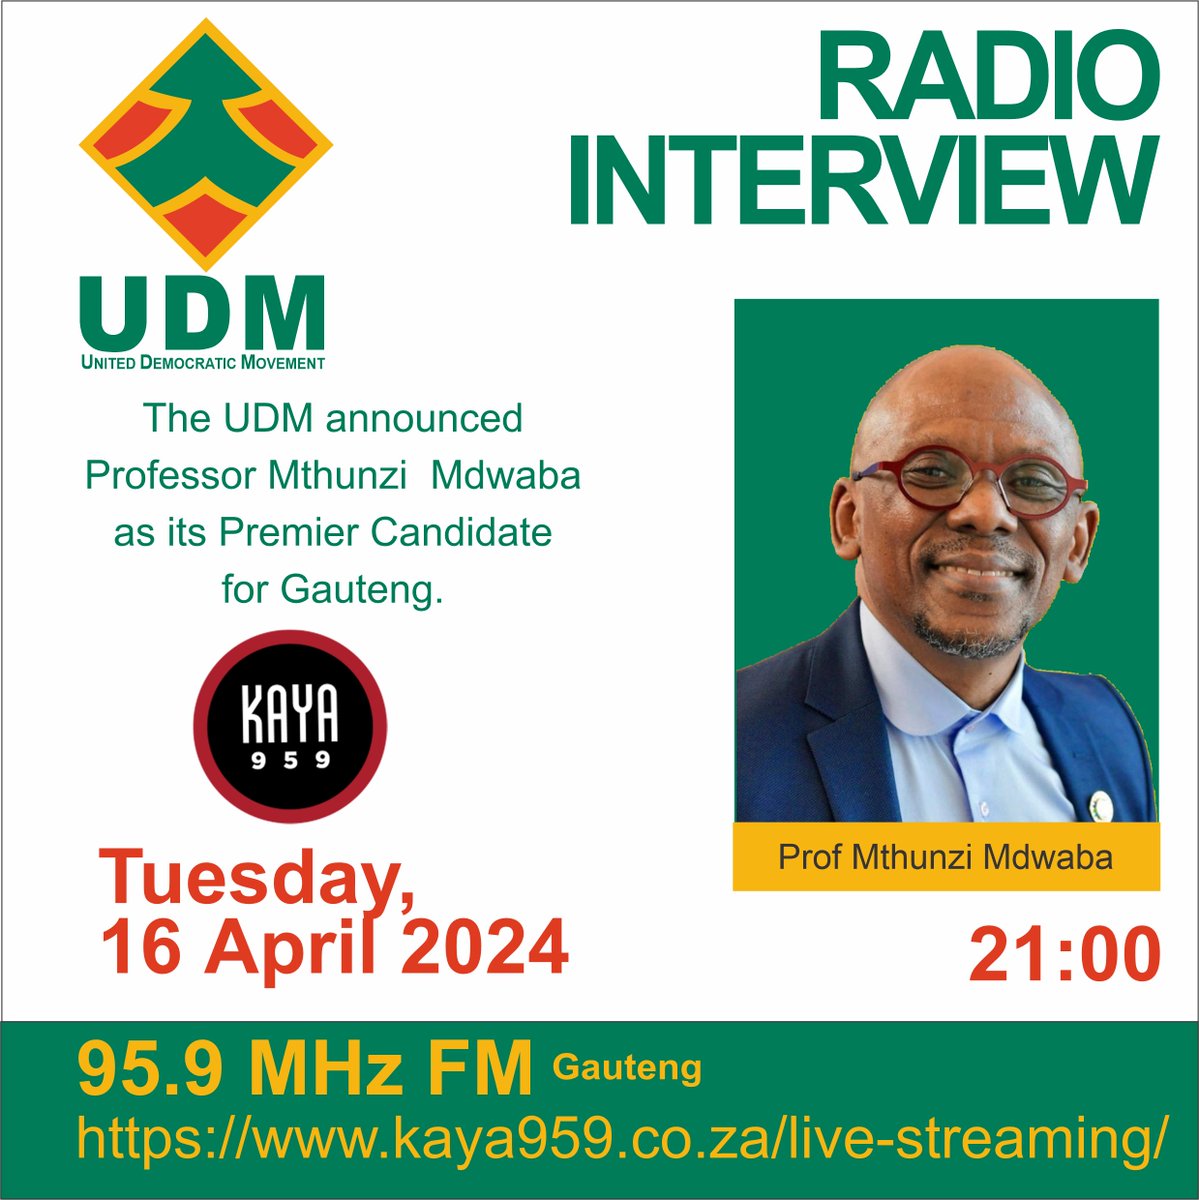 Prof Mthunzi Mdwaba, UDM Premier Candidate for Gauteng, will have an interview tonight, 16 April, on Khaya 959 at 21:00 (kaya959.co.za/live-streaming/) @Tzoro1